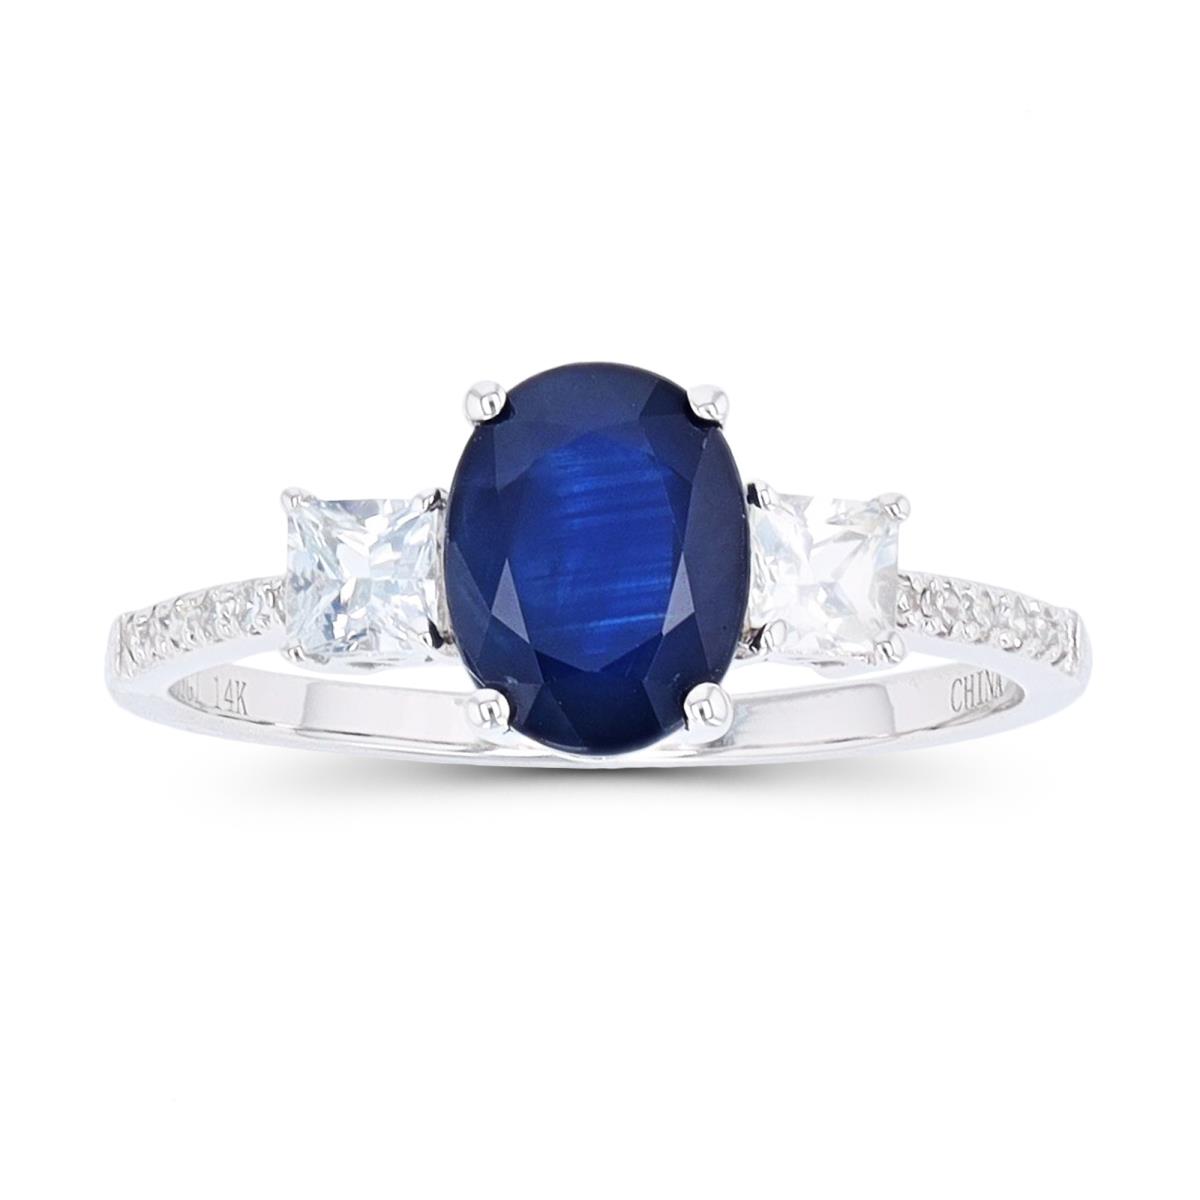 14K White Gold 0.054cttw Rnd Diamonds & 8x6mm Ov Blue Sapphire/0.34cttw Princess Diamonds Ring